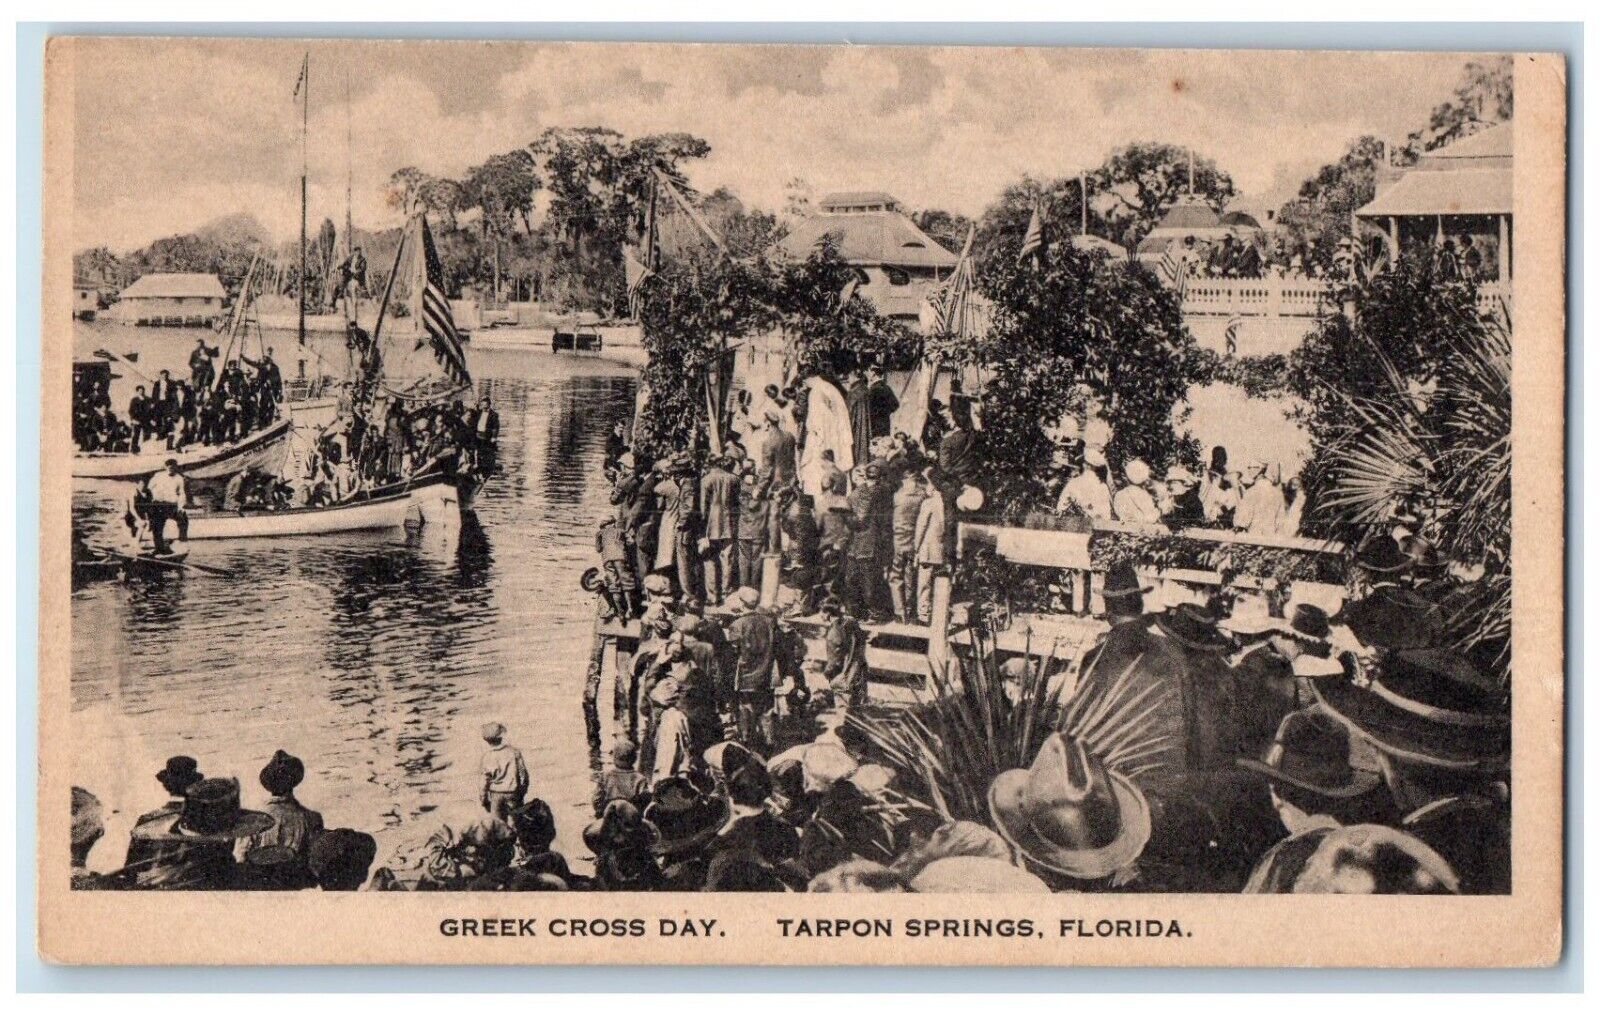 c1920 Greek Cross Day Parade Tarpon Springs Florida FL Vintage Antique Postcard